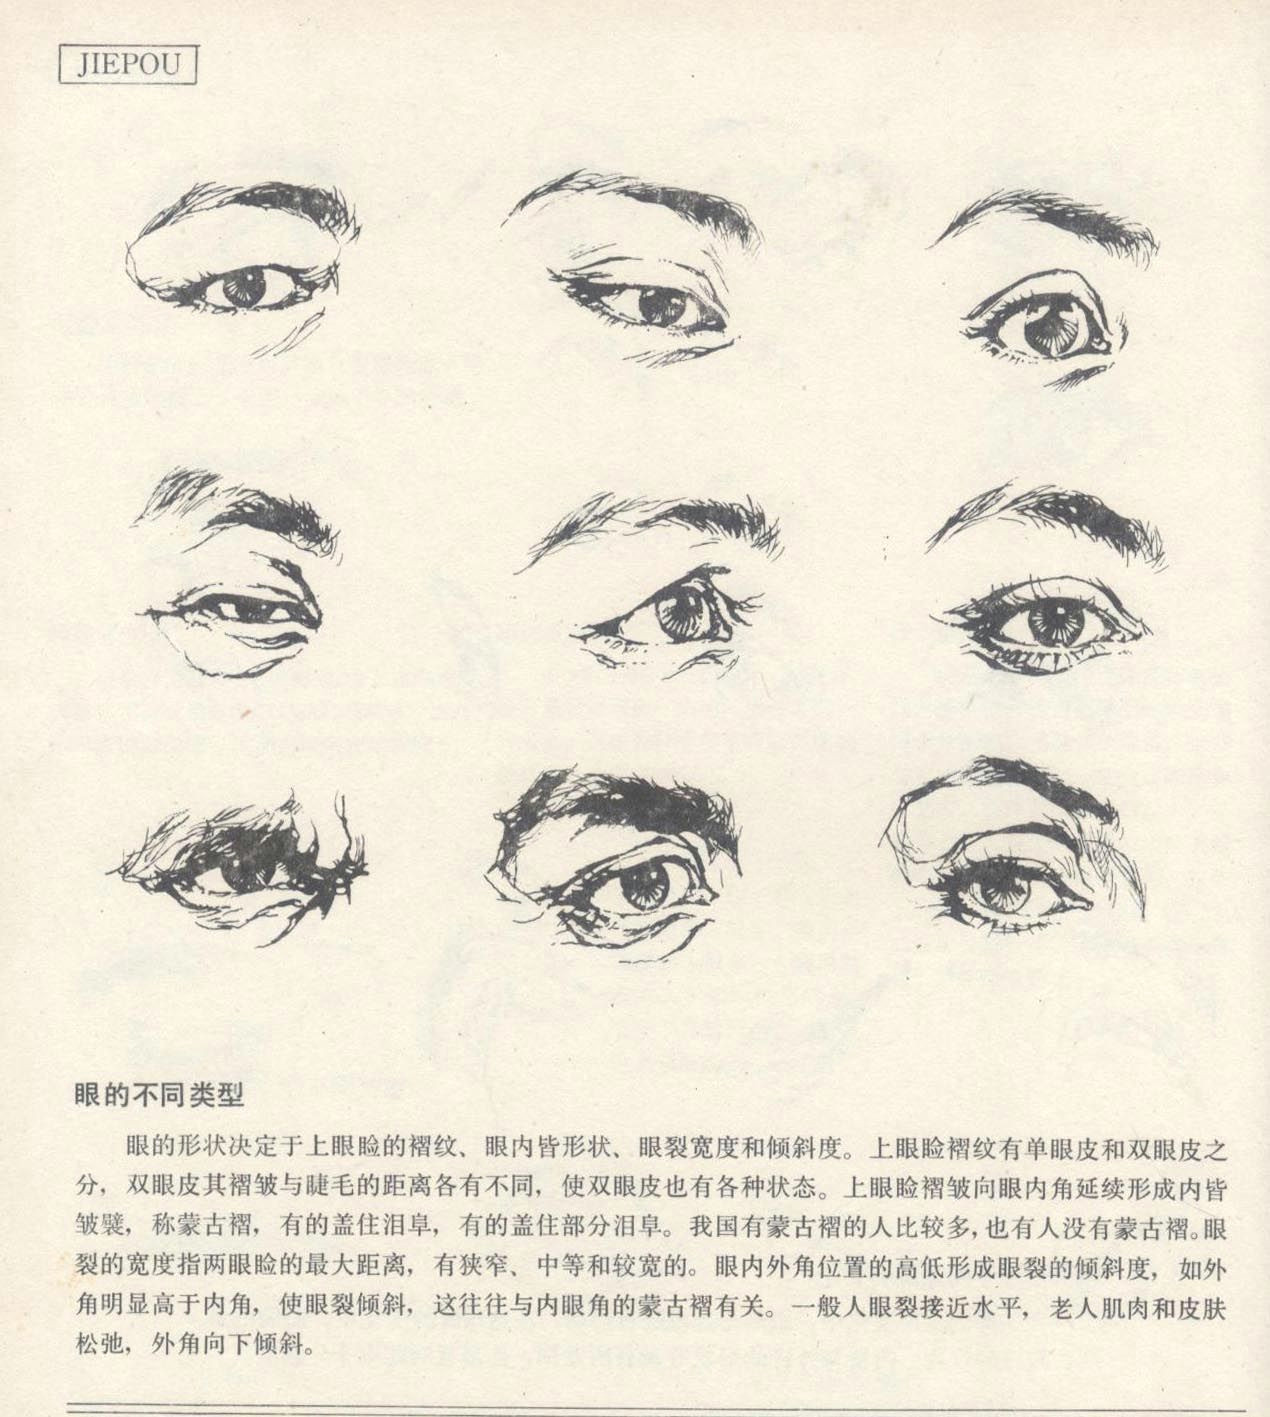 Drawing Of the Eye Anatomy Aooa E A A Oc Aooa A E E A Ae Ae C E Oae A E µe C A E E C Ae A E